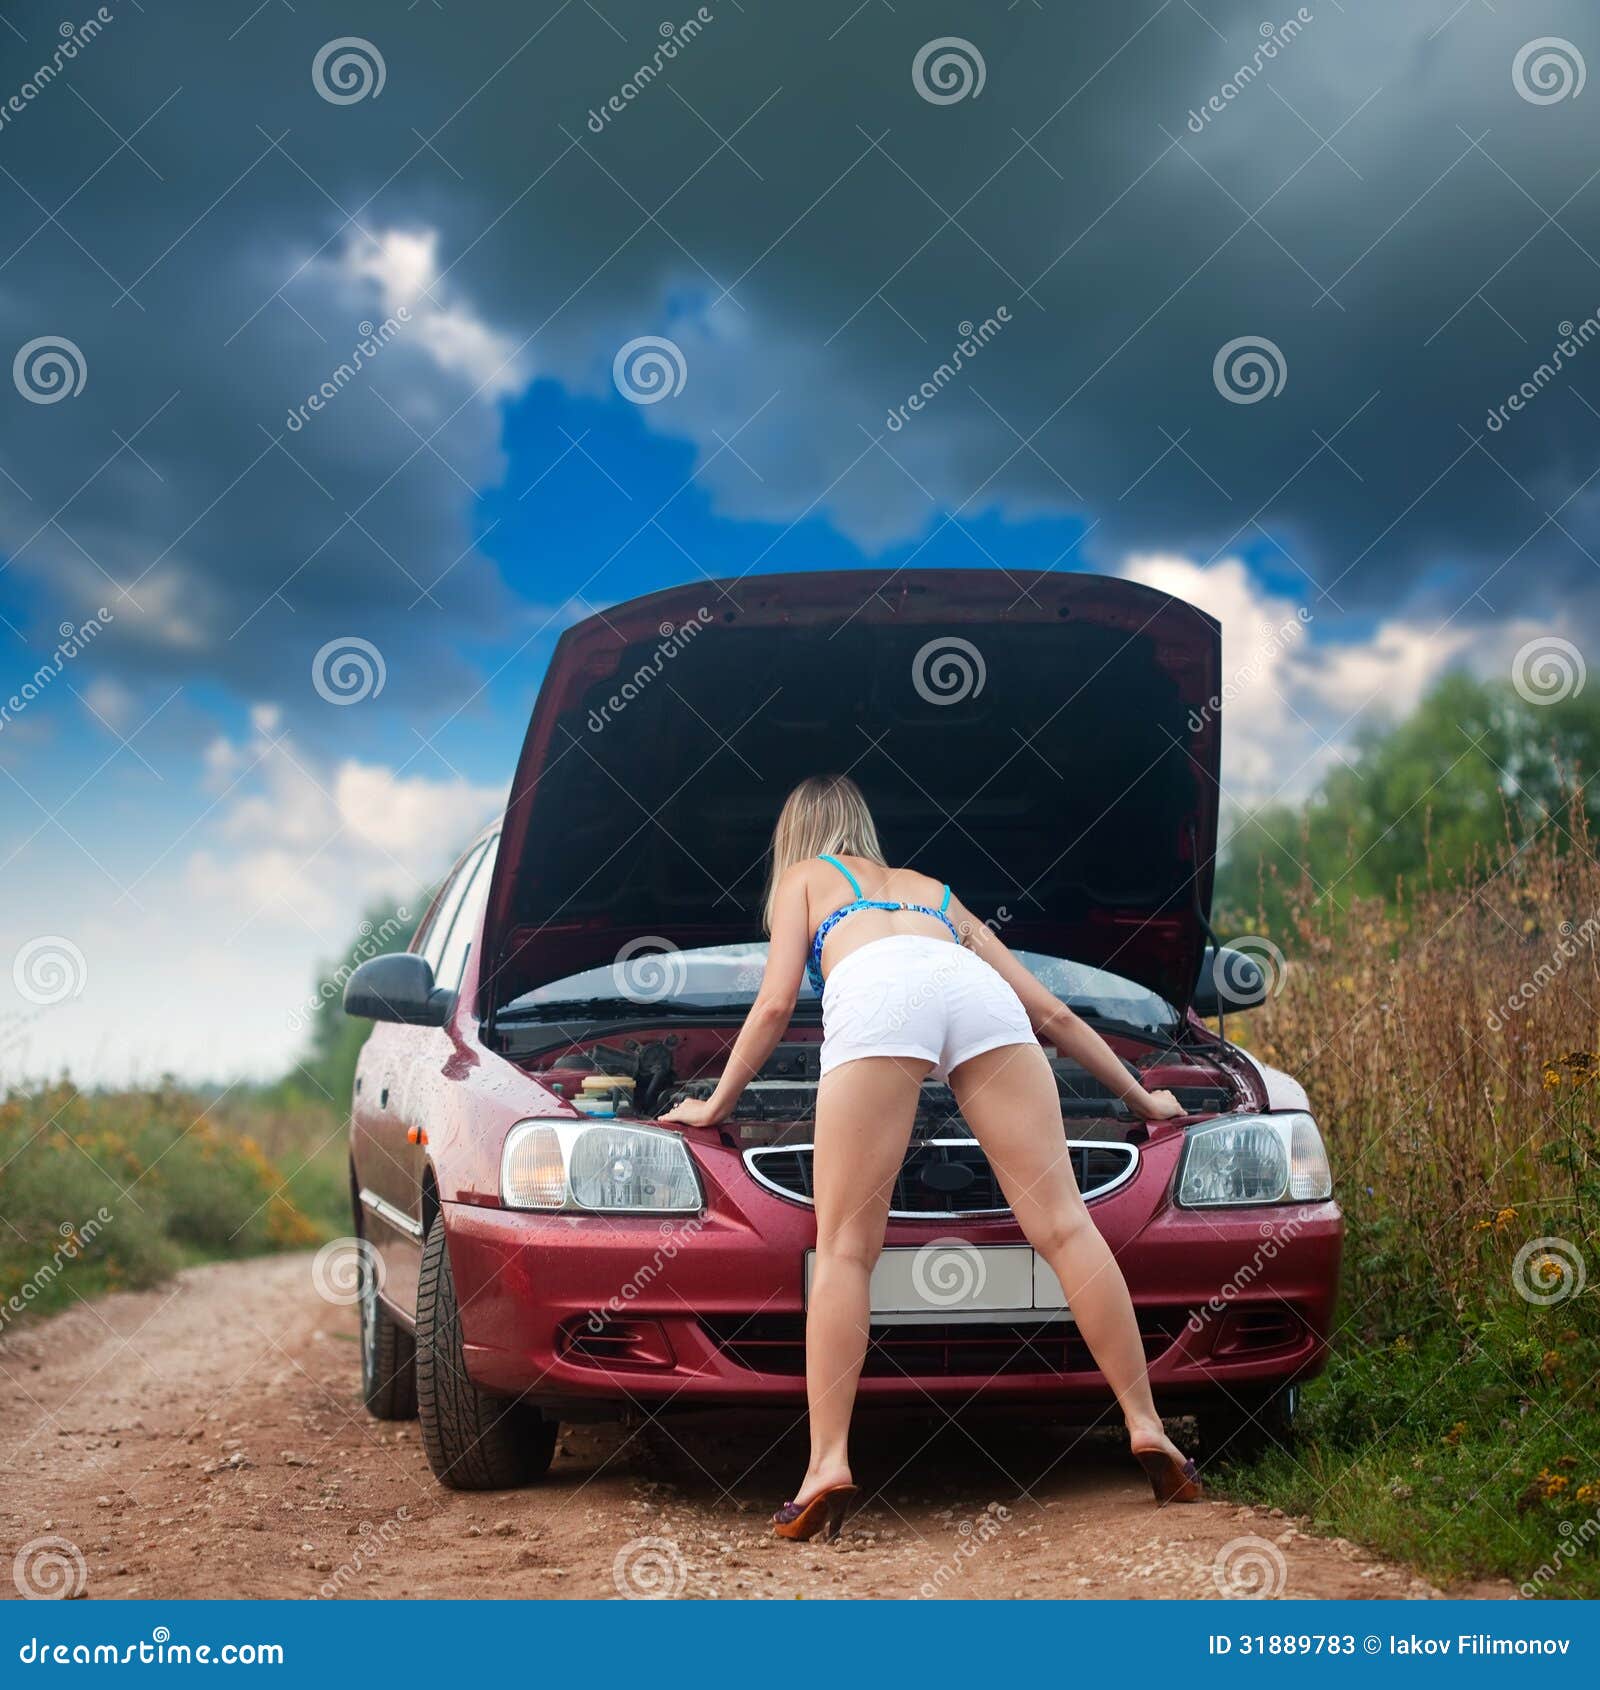 Sexy Girl Looking Under Car Hood Stock Photos